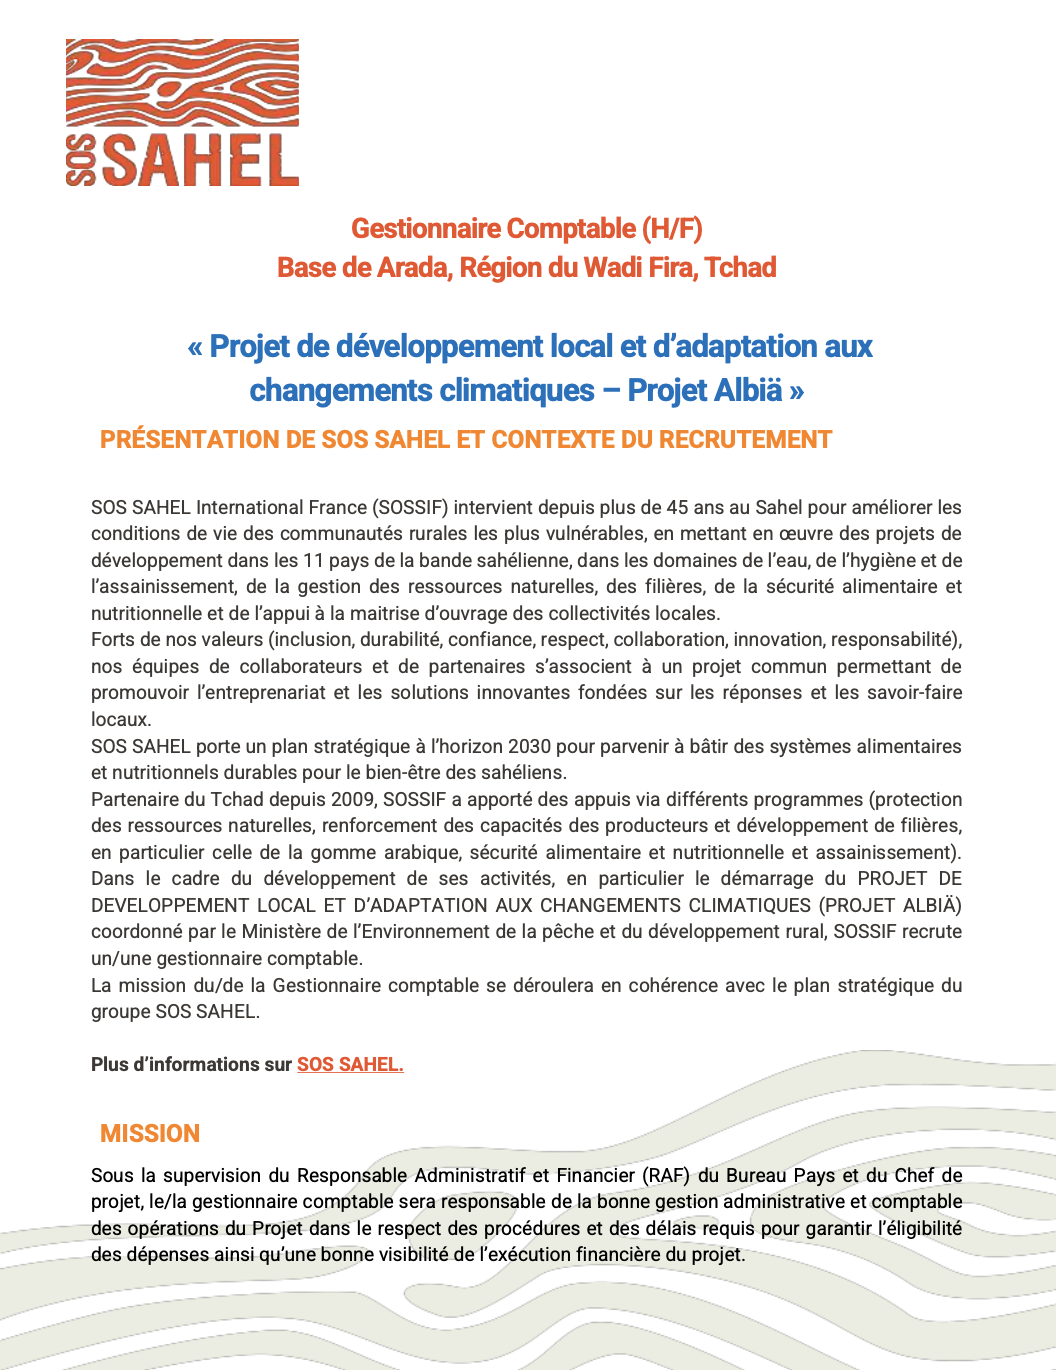 Tchad : SOS SAHEL International France (SOSSIF) recrute un(e) Gestionnaire Comptable à Arada